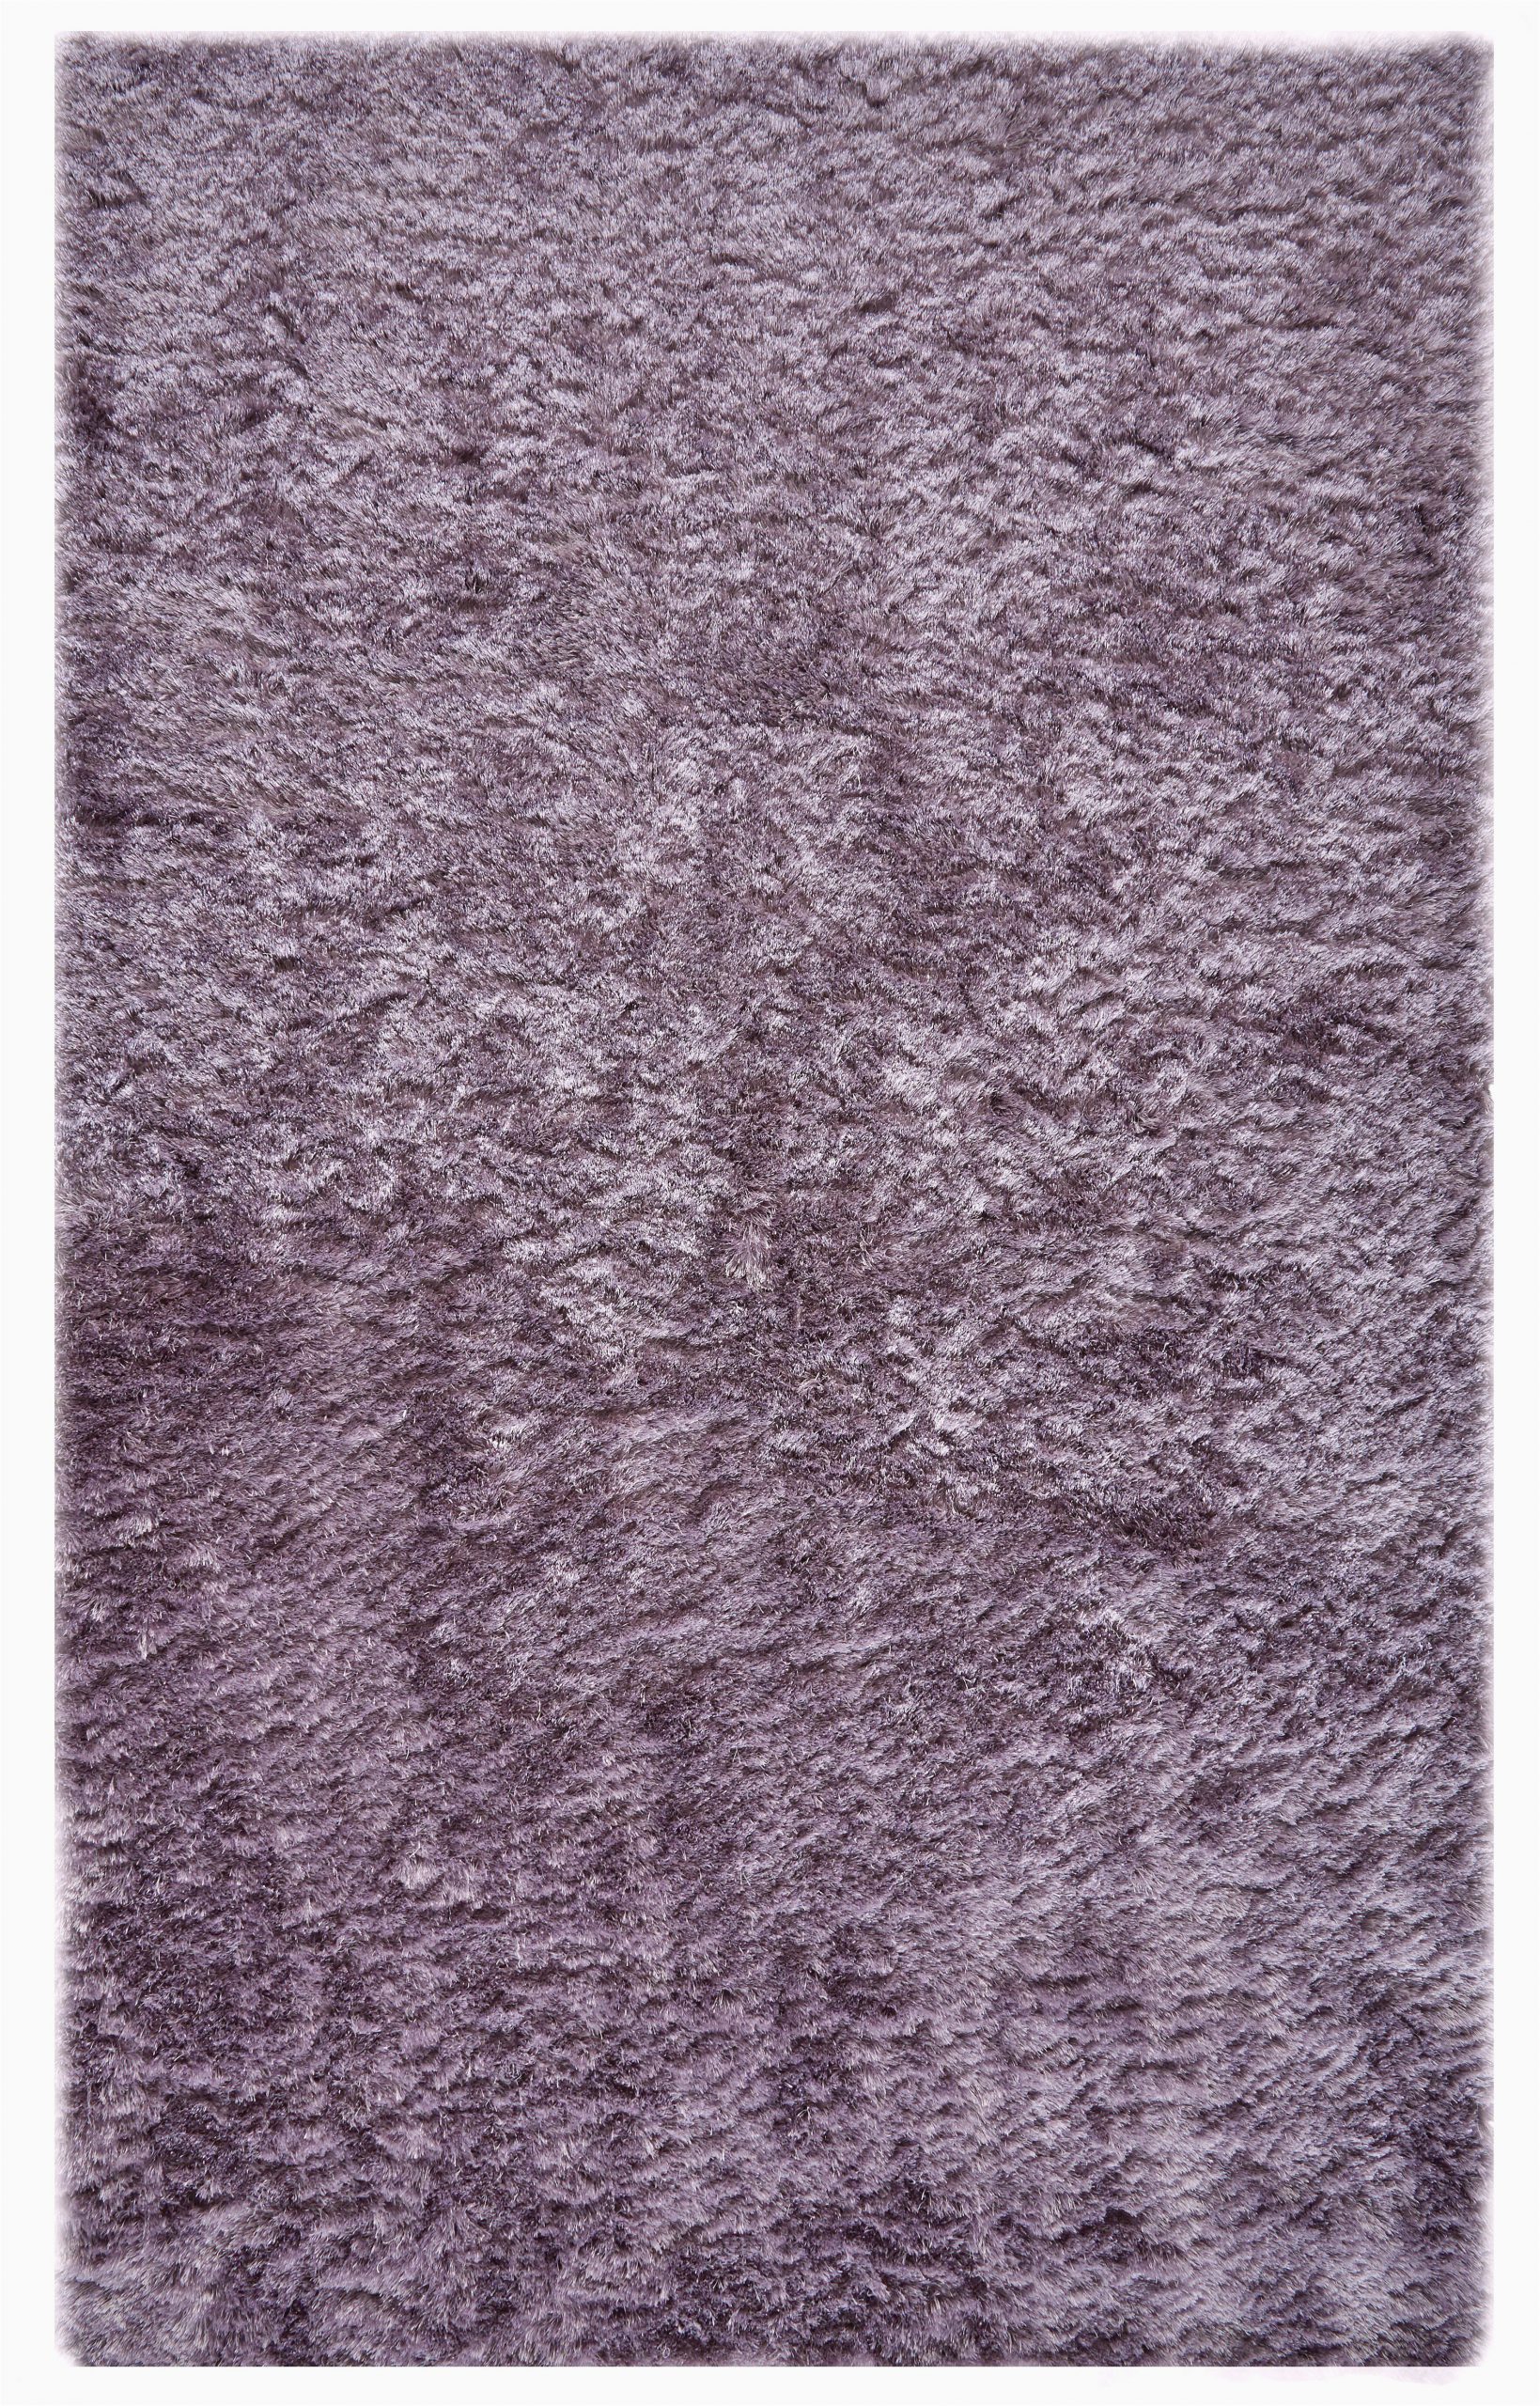 Lavender and Grey area Rug Planas Hand Tufted Purple area Rug